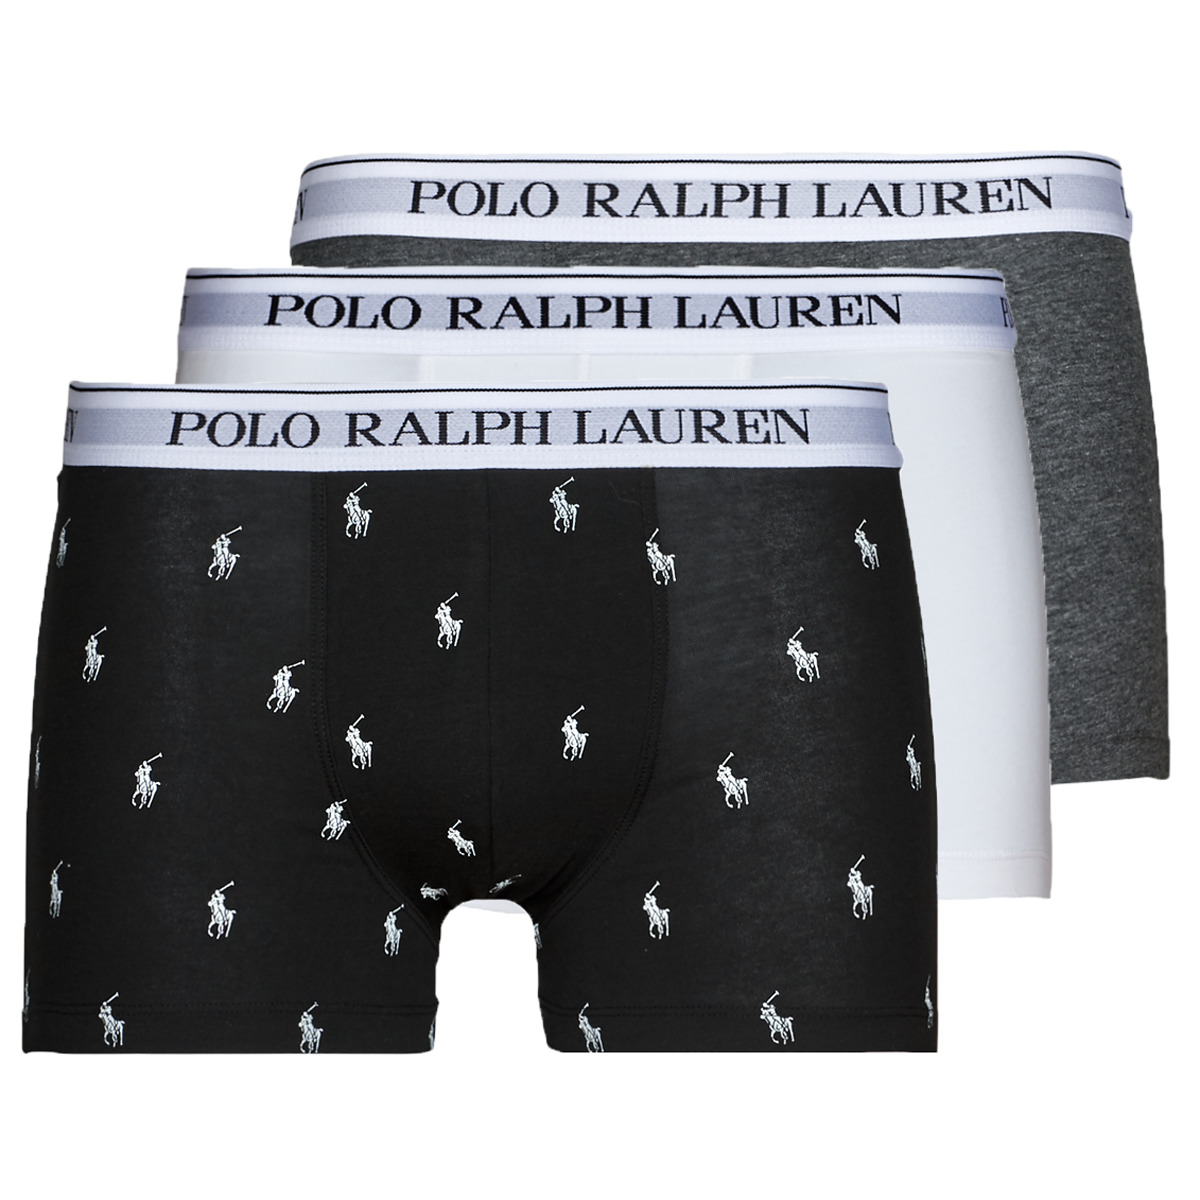 city state embroidery polo shirt Boxer Polo Ralph Lauren CLASSIC TRUNK X3 Preto / Cinza / Branco